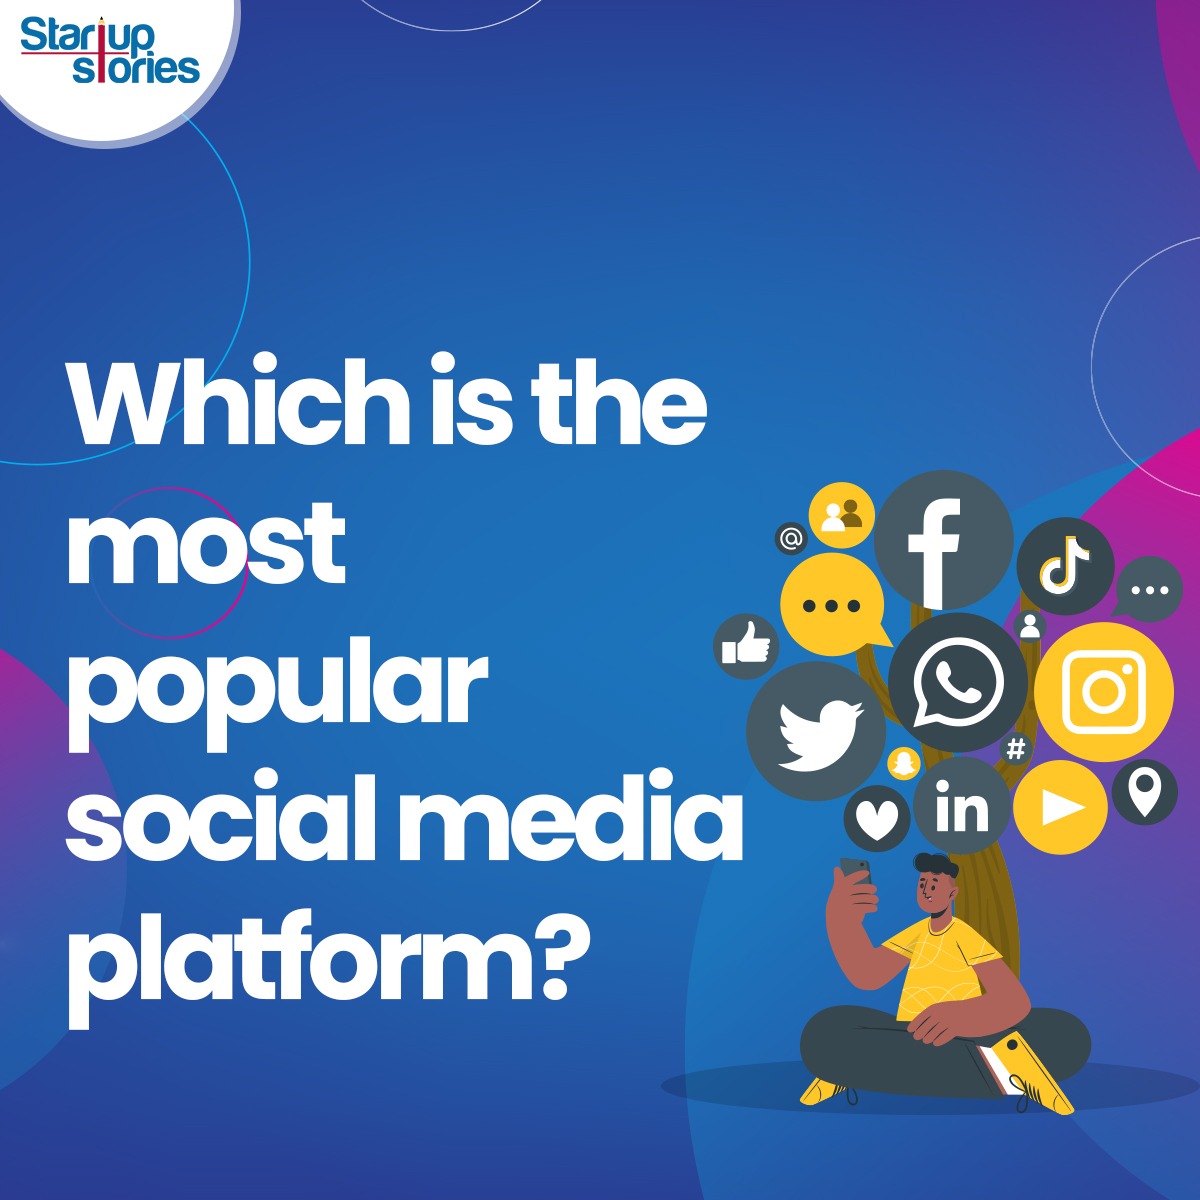 Let us know in comments below!

#StartupStories #InteractivePost #Startups #Companies #SocialMedia #DigitalMarketing #MarketingStrategies